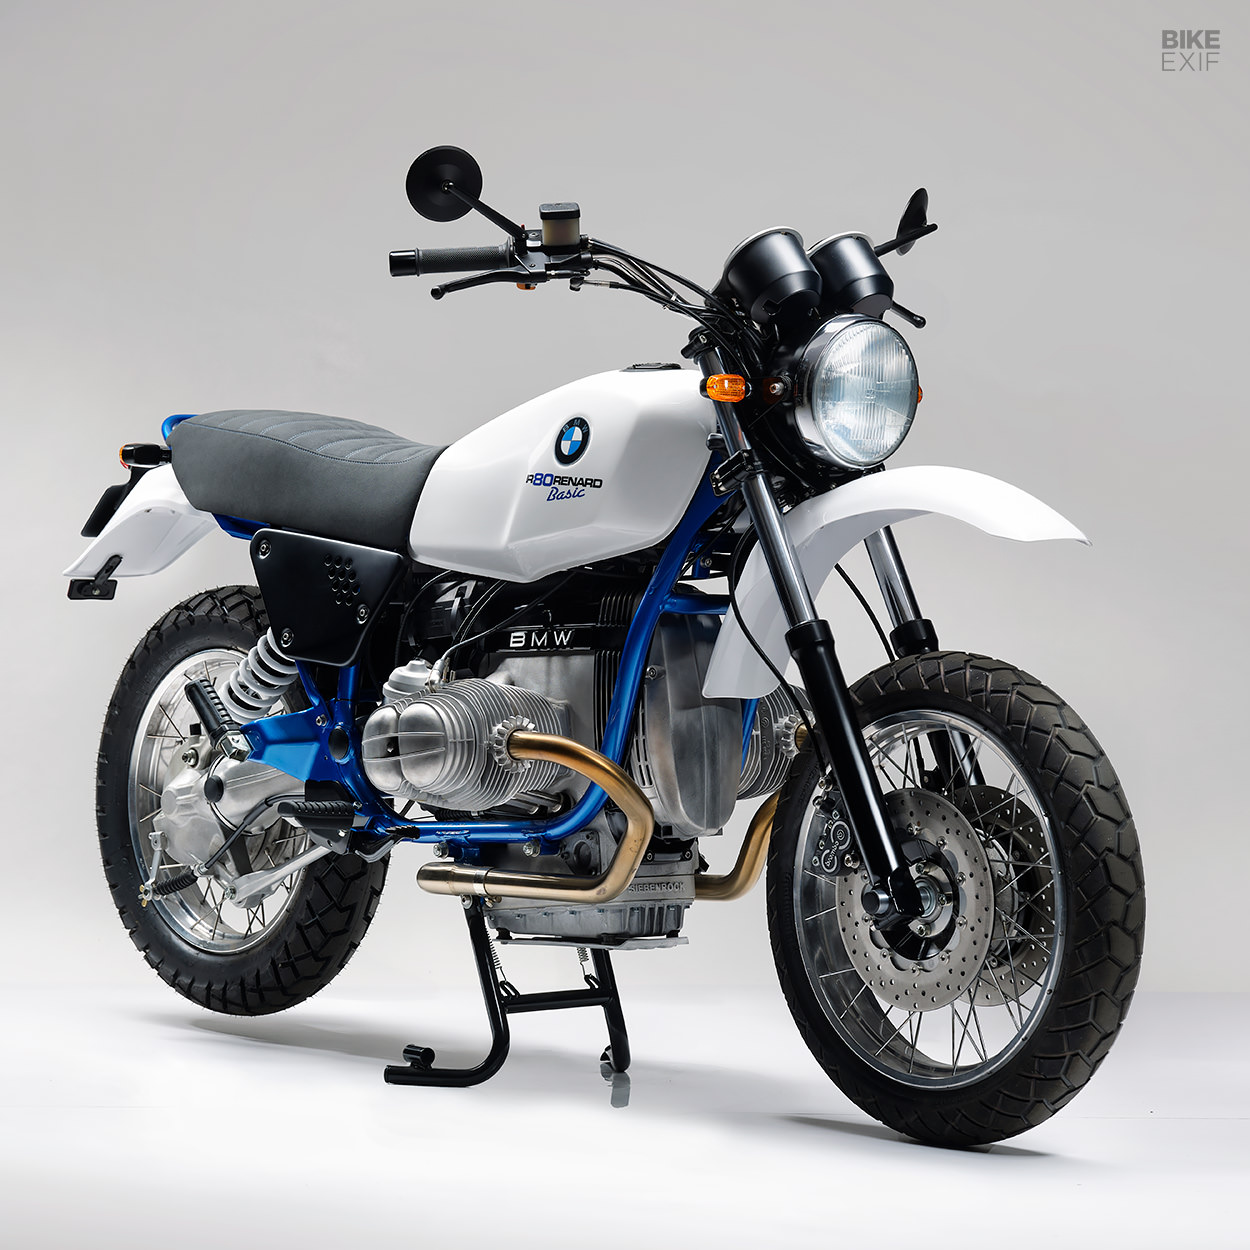 Basic restoration of the BMW R80 by Renard